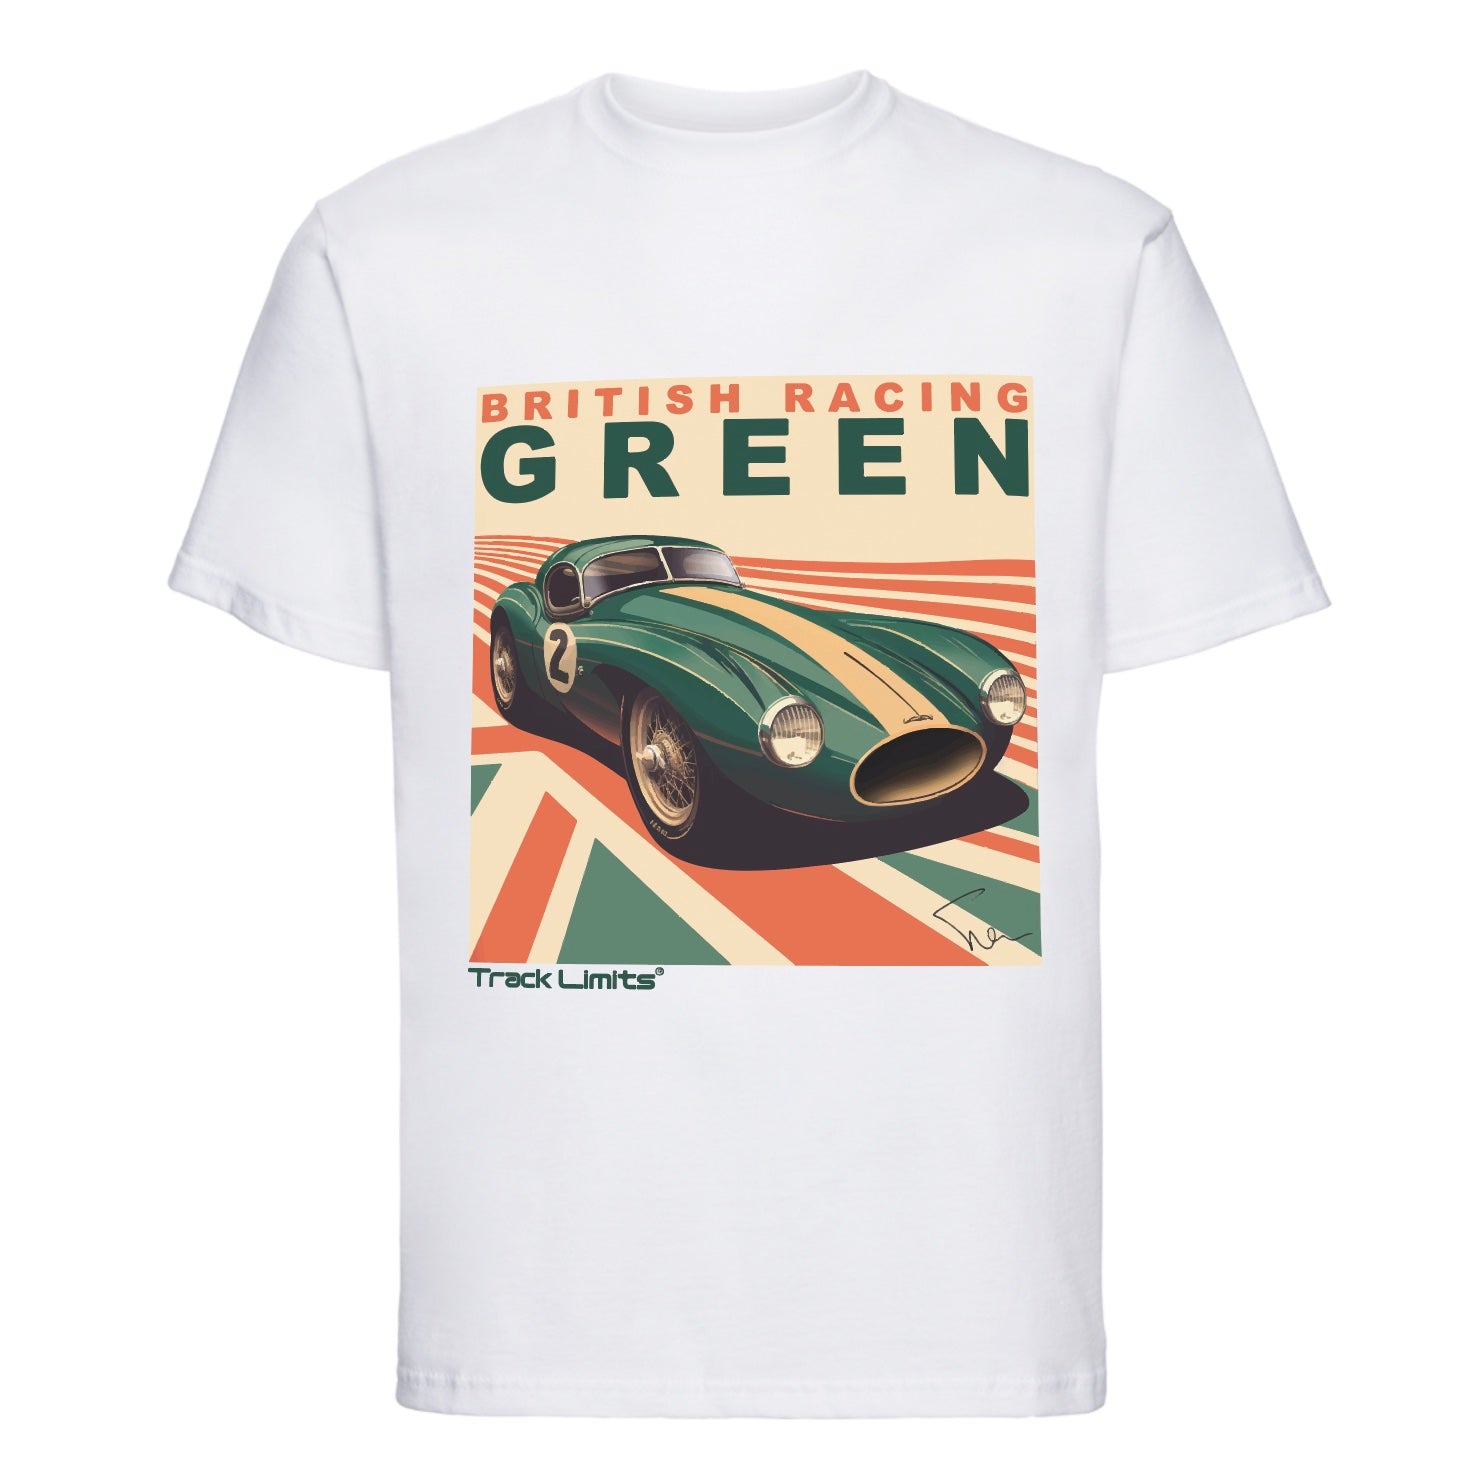 Track Limits T-Shirt features Steve Lewis artwork car poster Future Racer